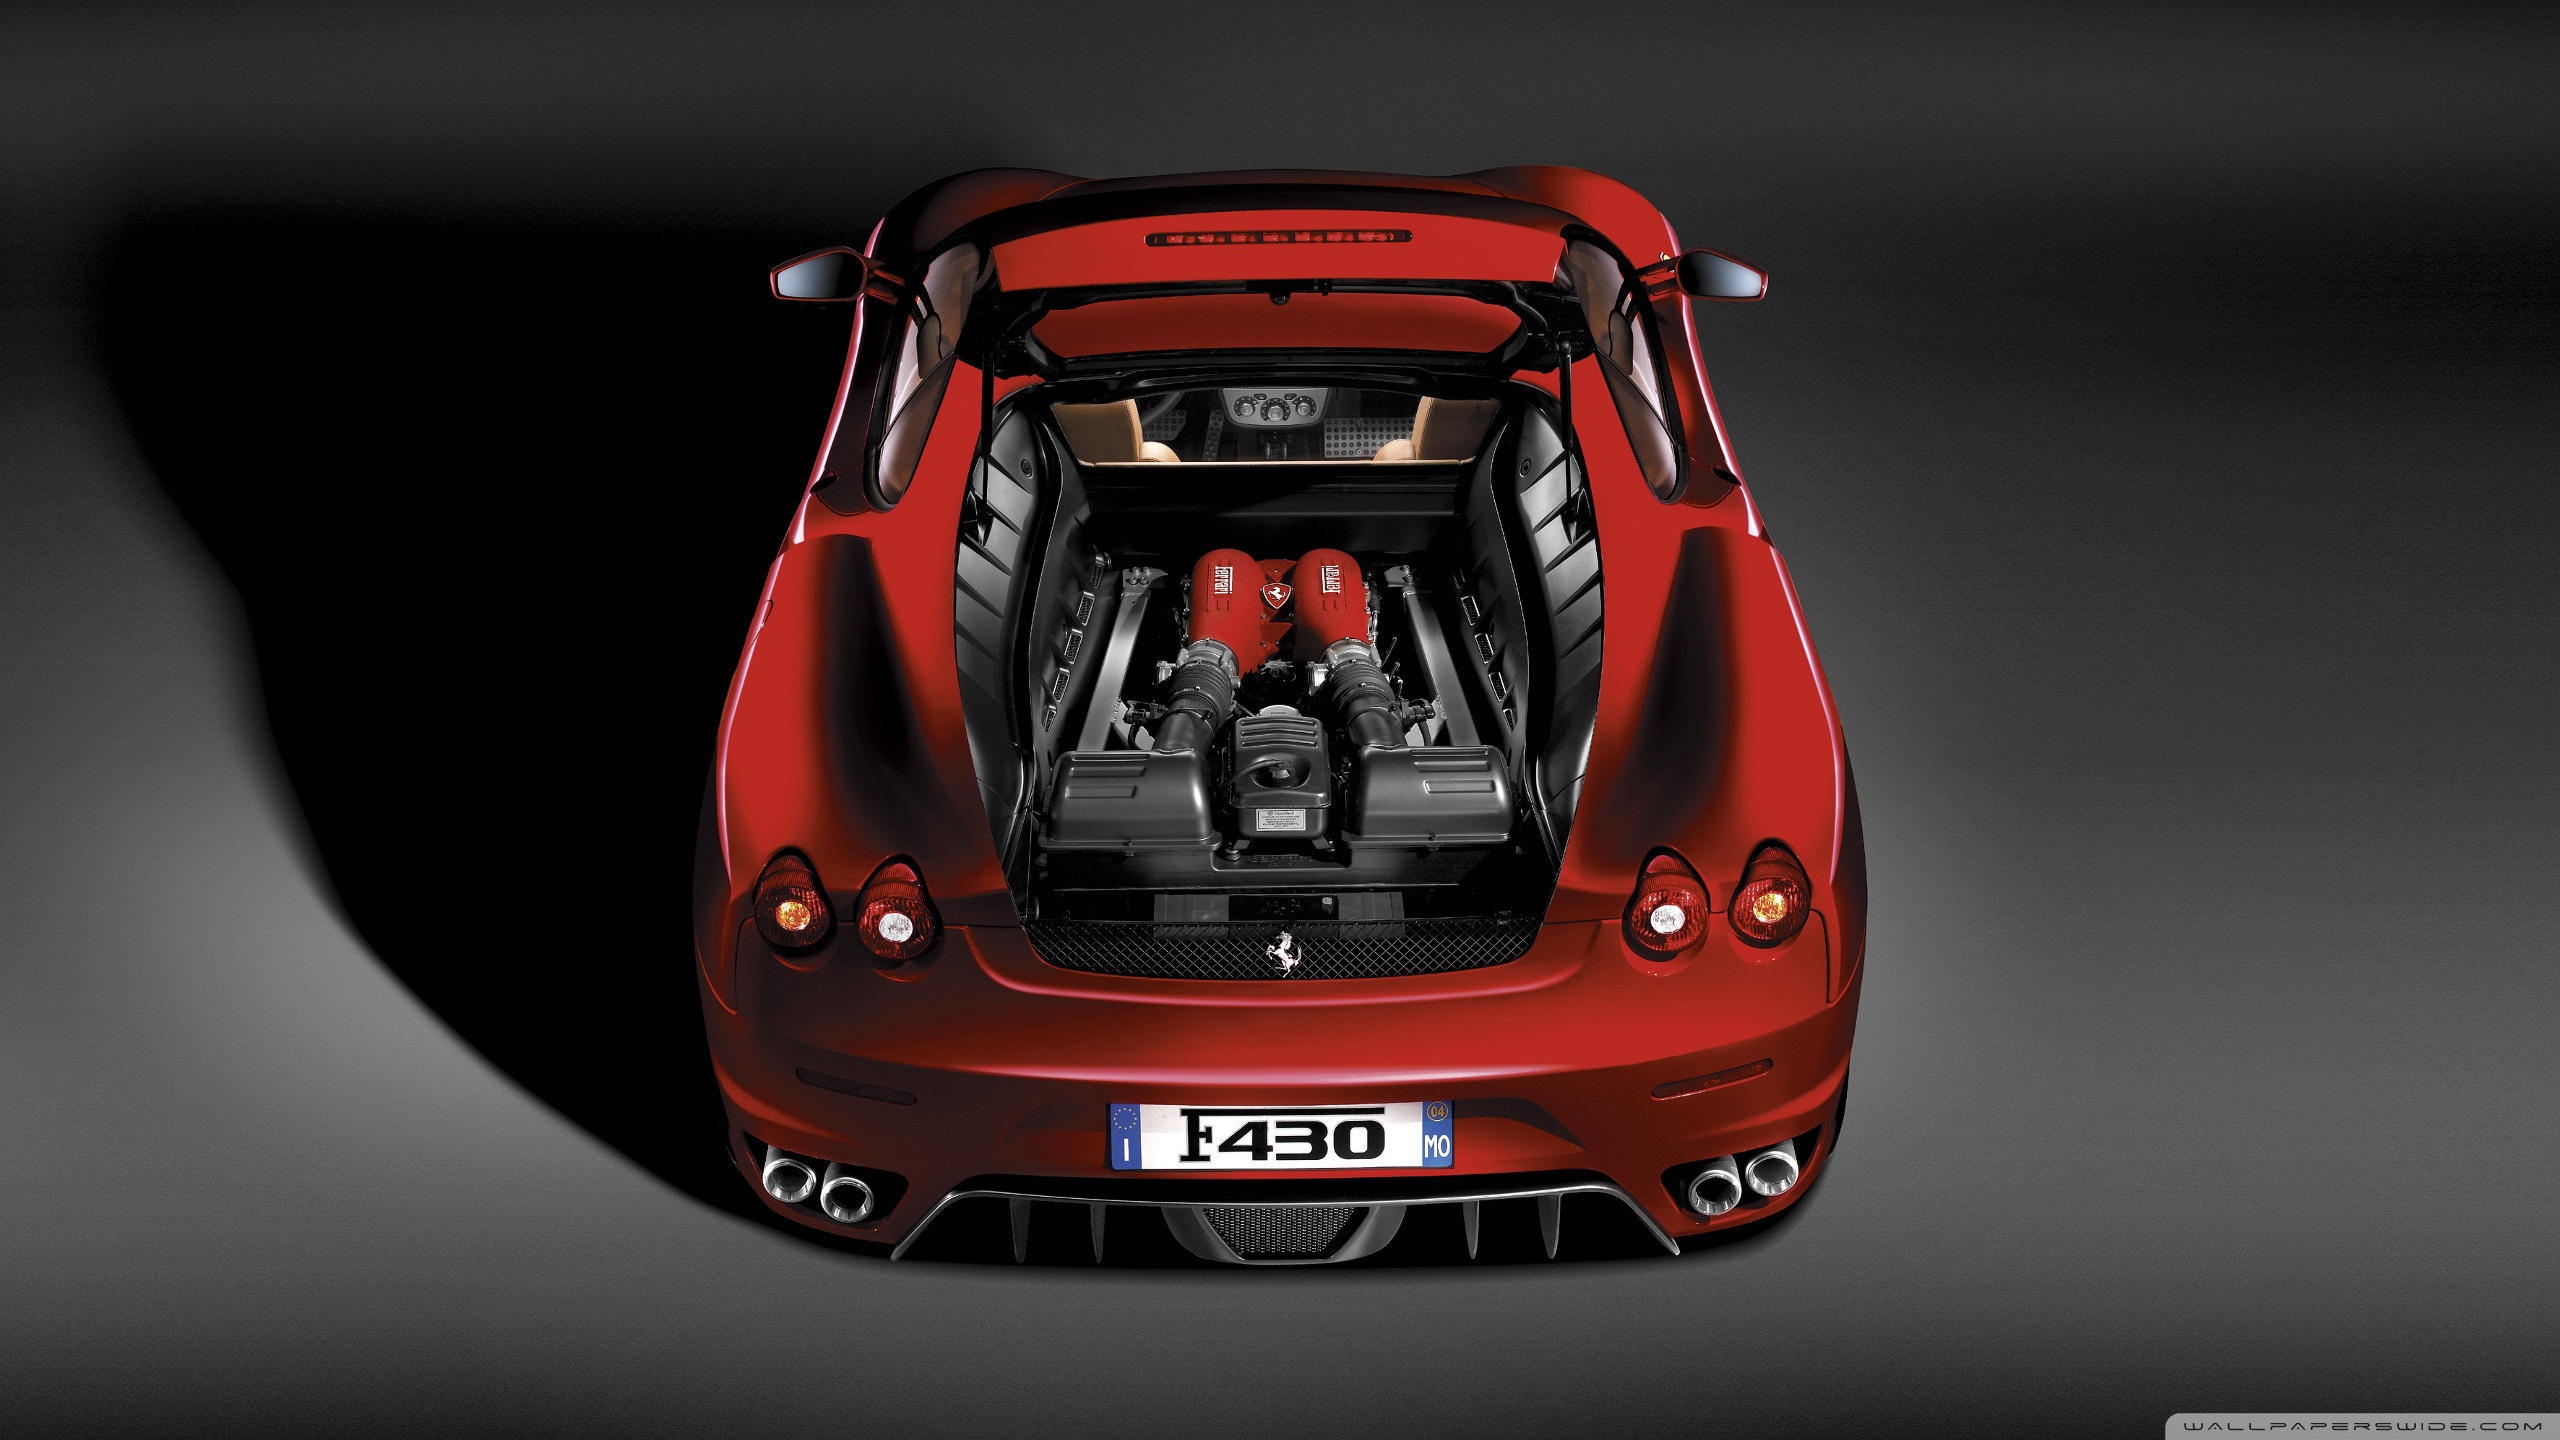 Ferrari F430 Engine Ultra Hd Desktop Background Wallpaper For 4k Uhd Tv Tablet Smartphone